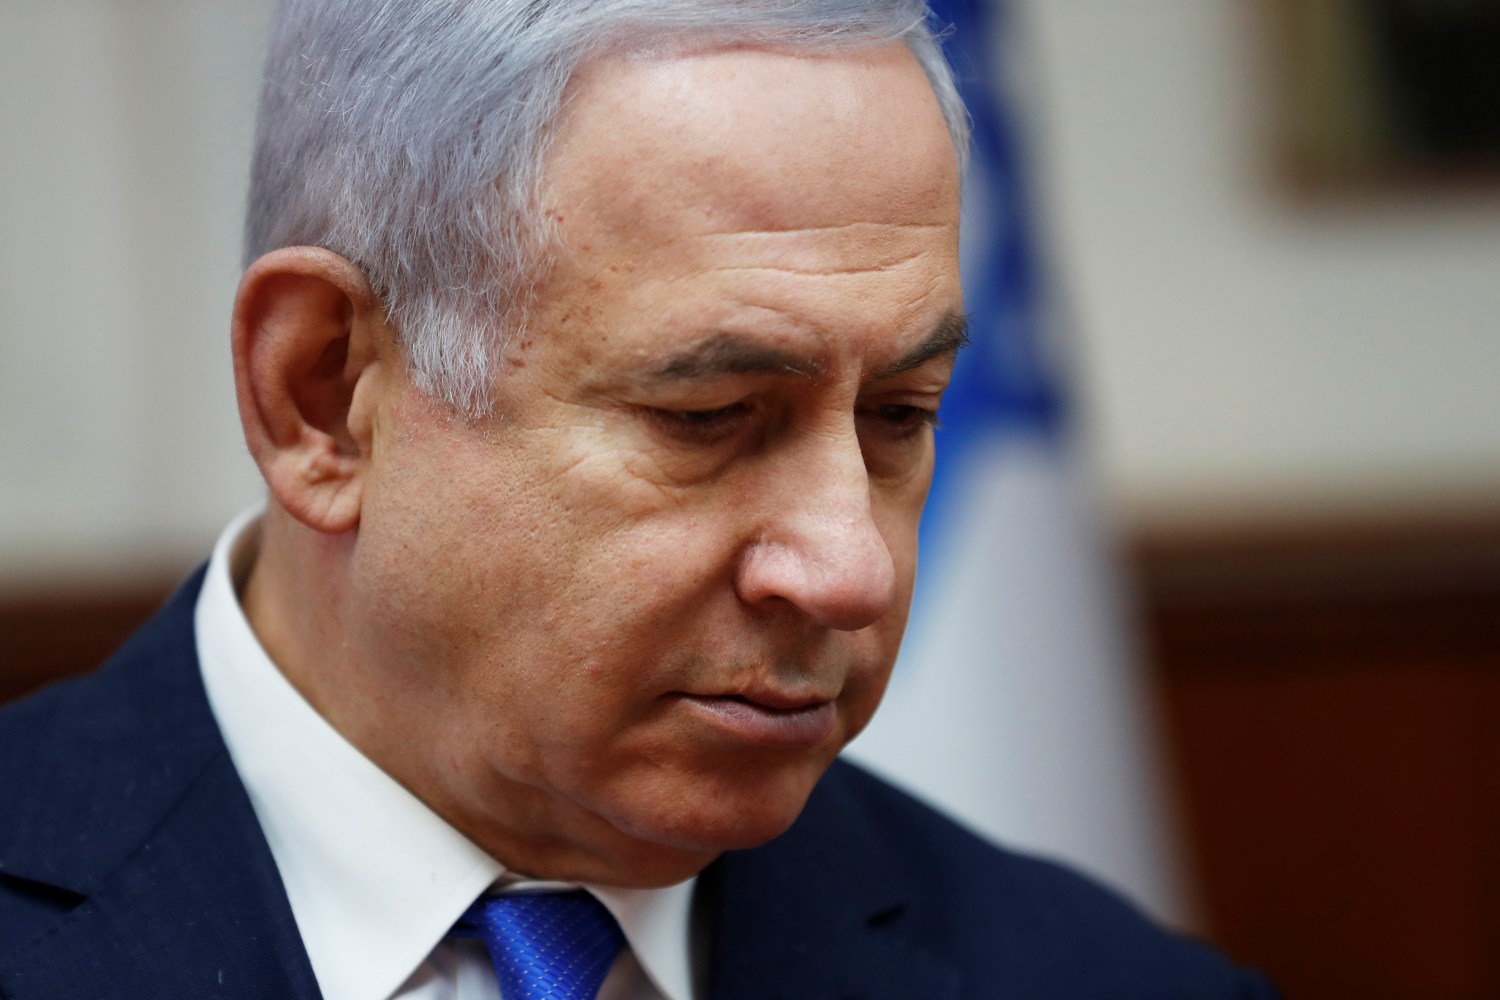 Israeli Prime Minister Benjamin Netanyahu attends the weekly cabinet meeting in Jerusalem March 3, 2019. REUTERS/Ronen Zvulun - RC11FB562270